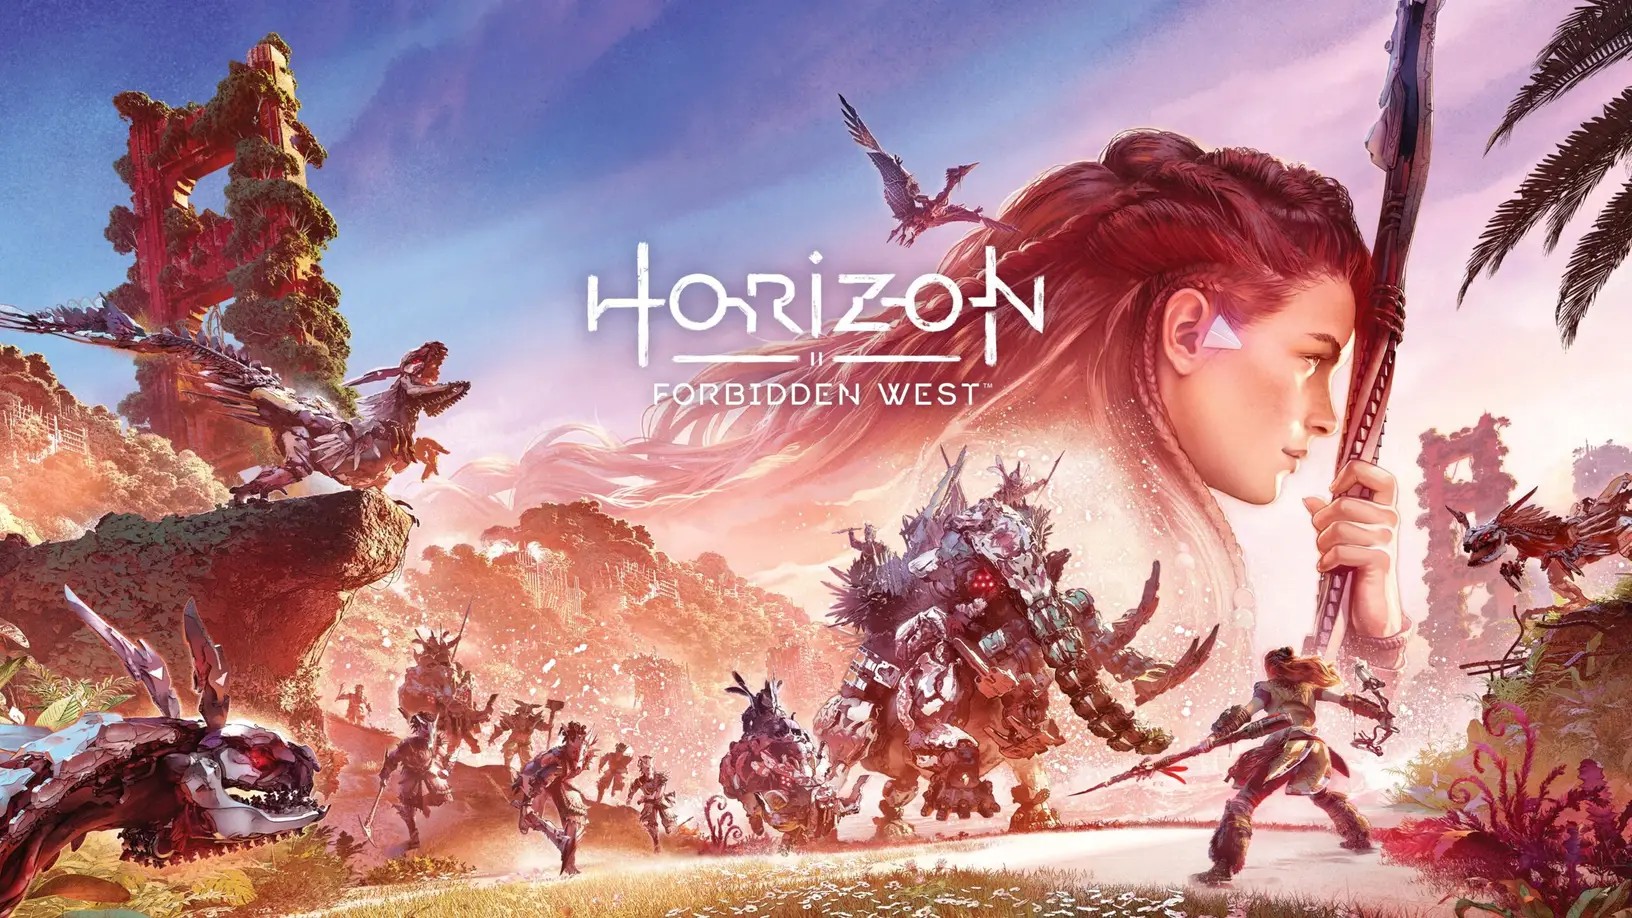 Jogo Horizon Zero Dawn - Complete Edition - Ps4 - Física